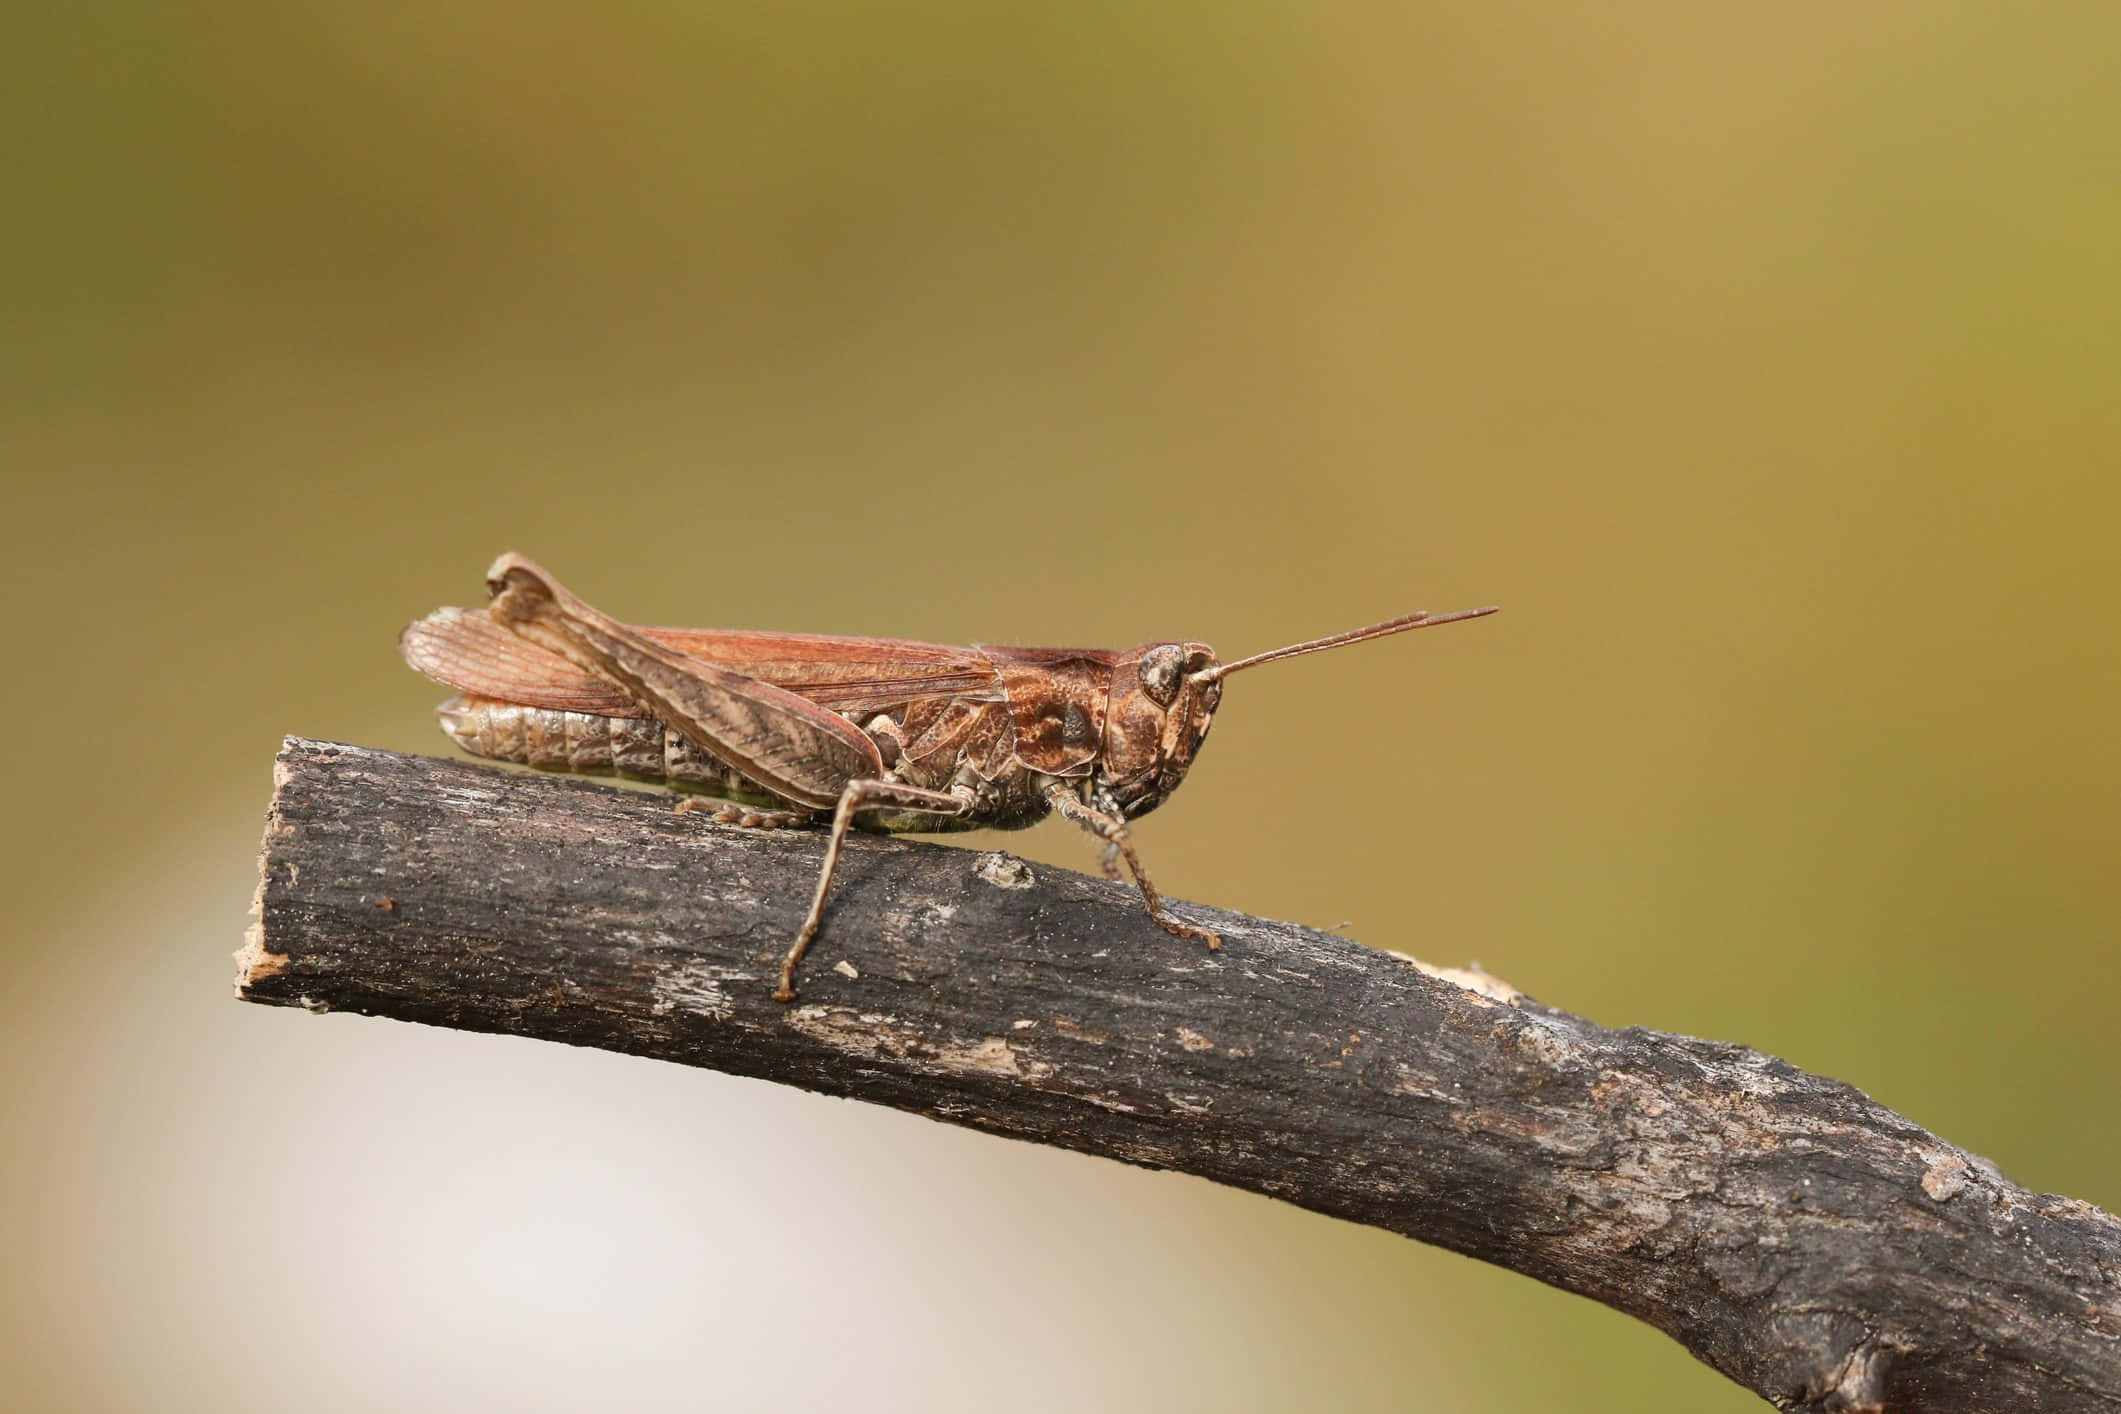 Vibrant Close-up Shot of a Green Grasshopper on a Blade of Grass